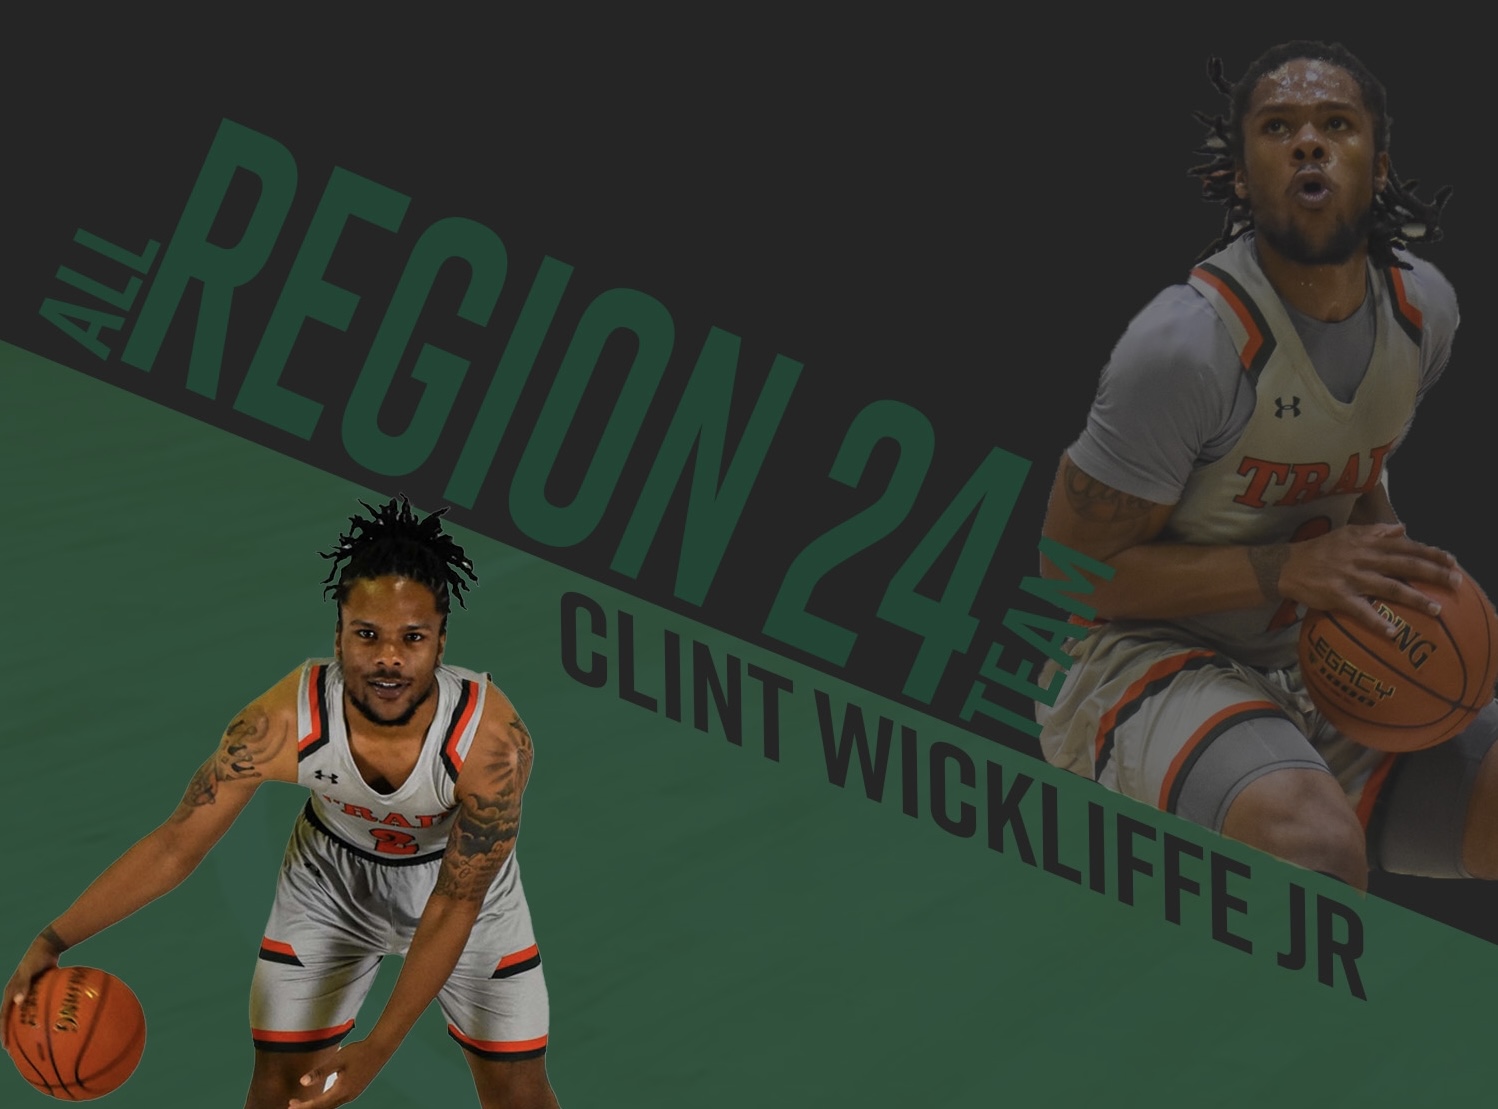 Clint Wickliffe Jr Named Region 24